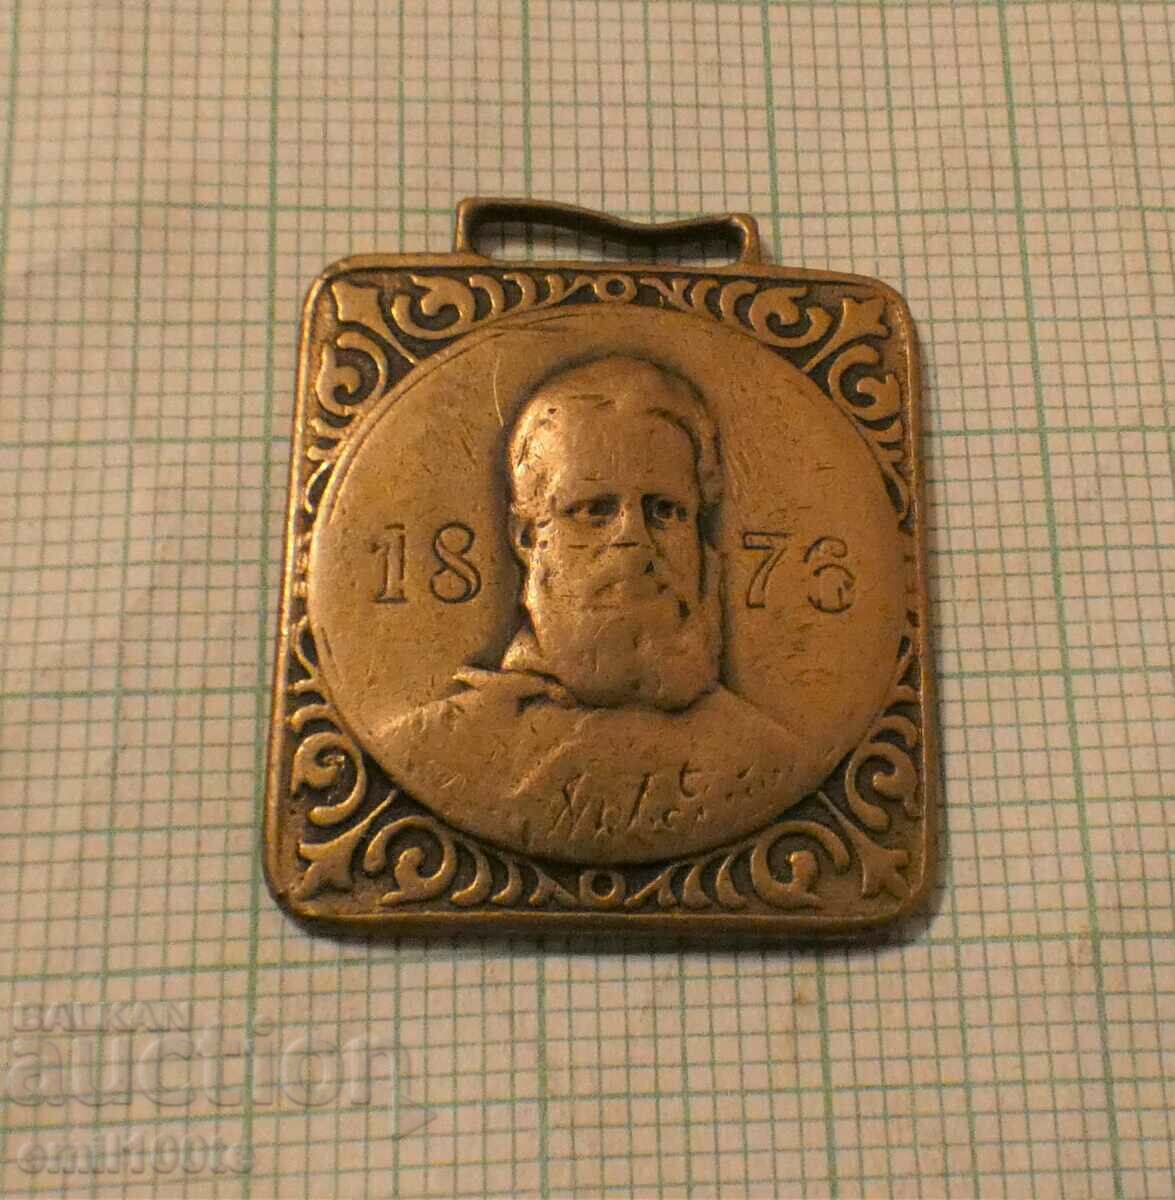 Veche medalie comemorativă Hristo Botev 1876